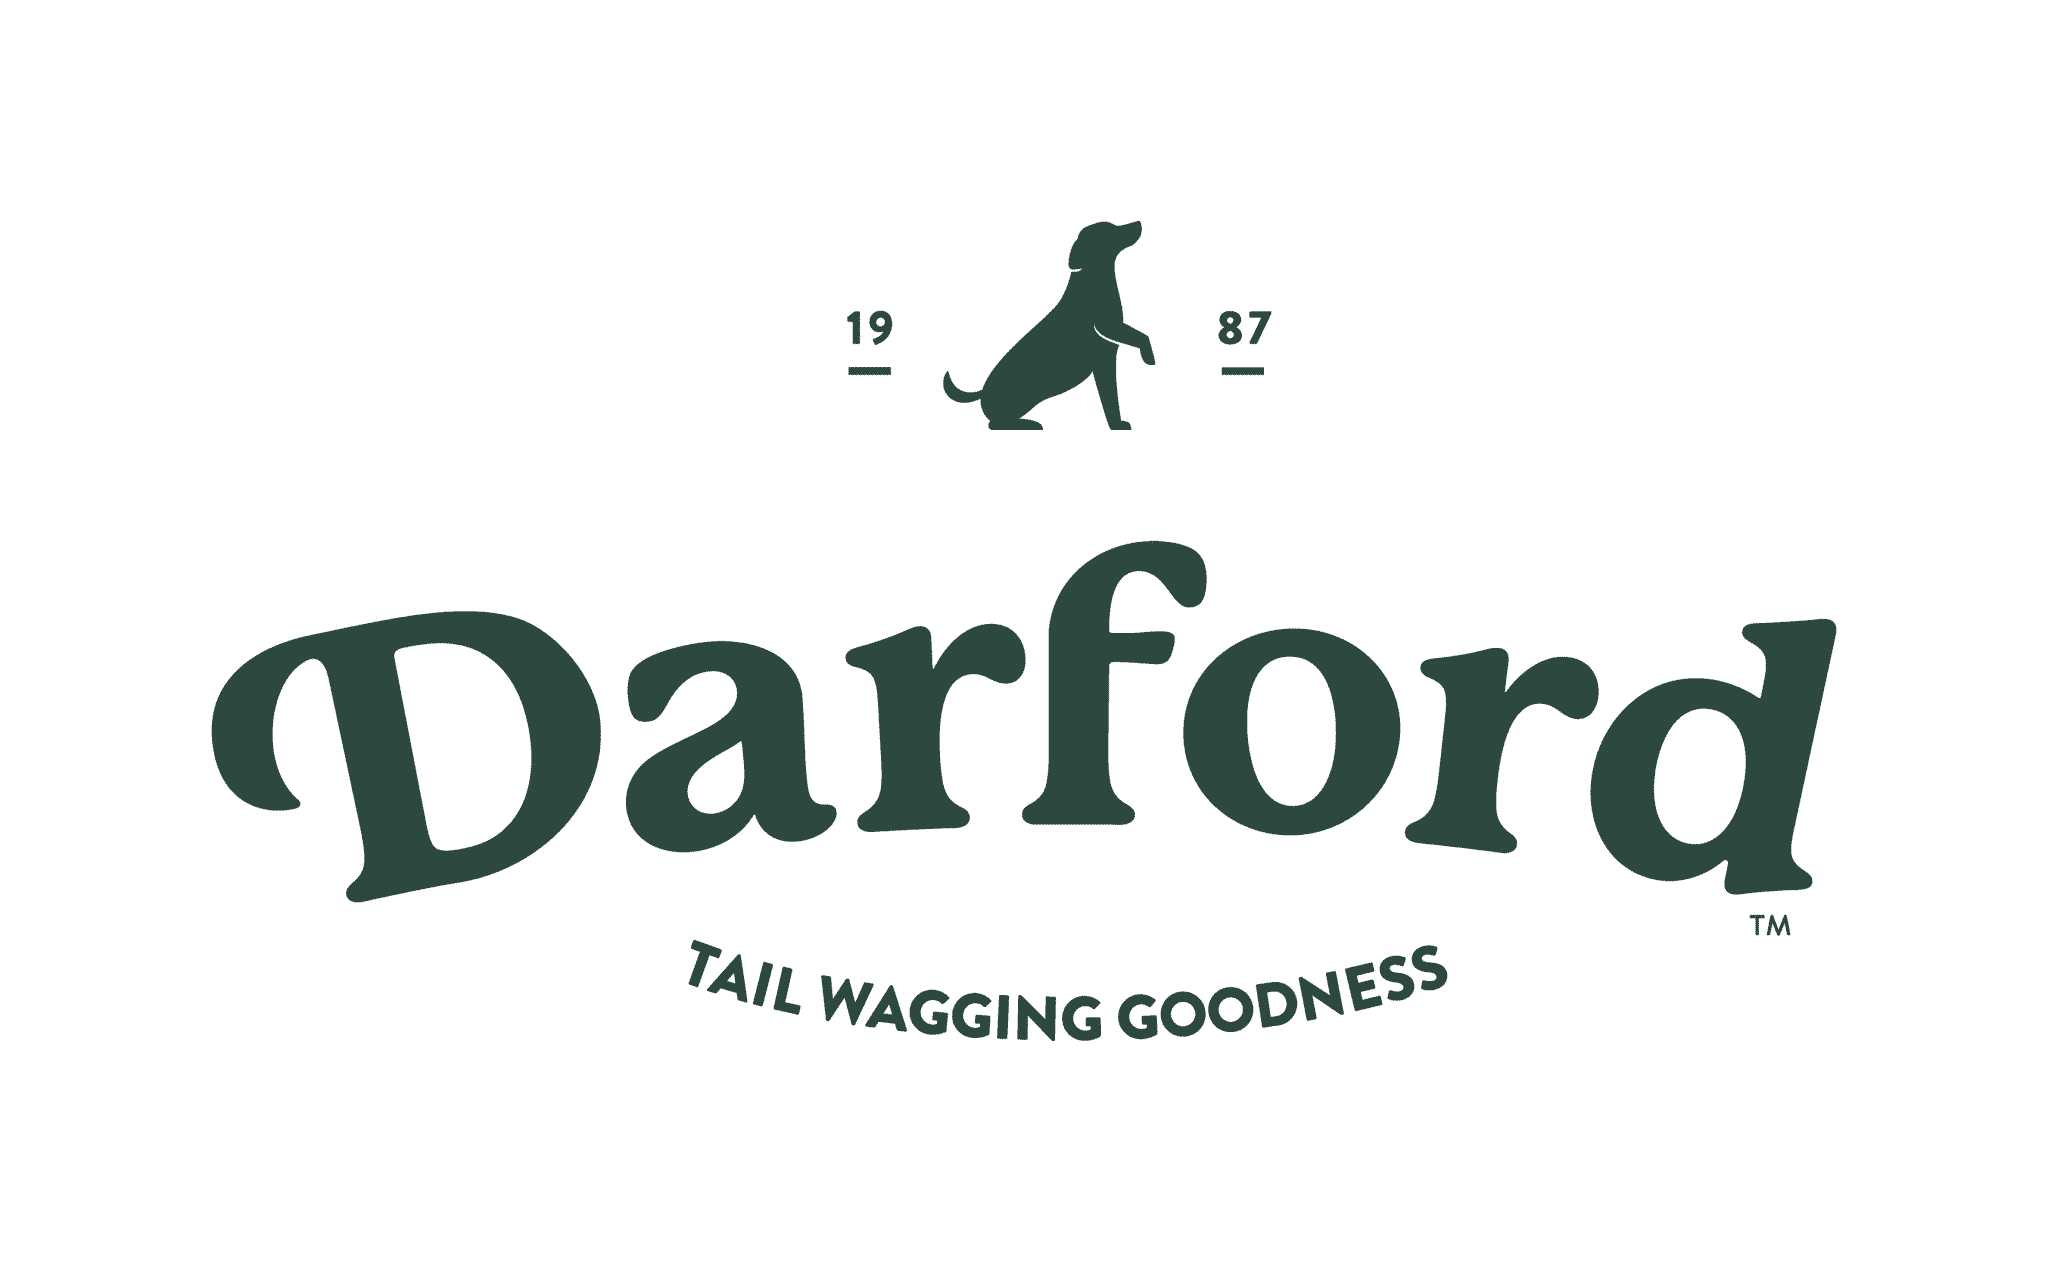 Updated darford logo